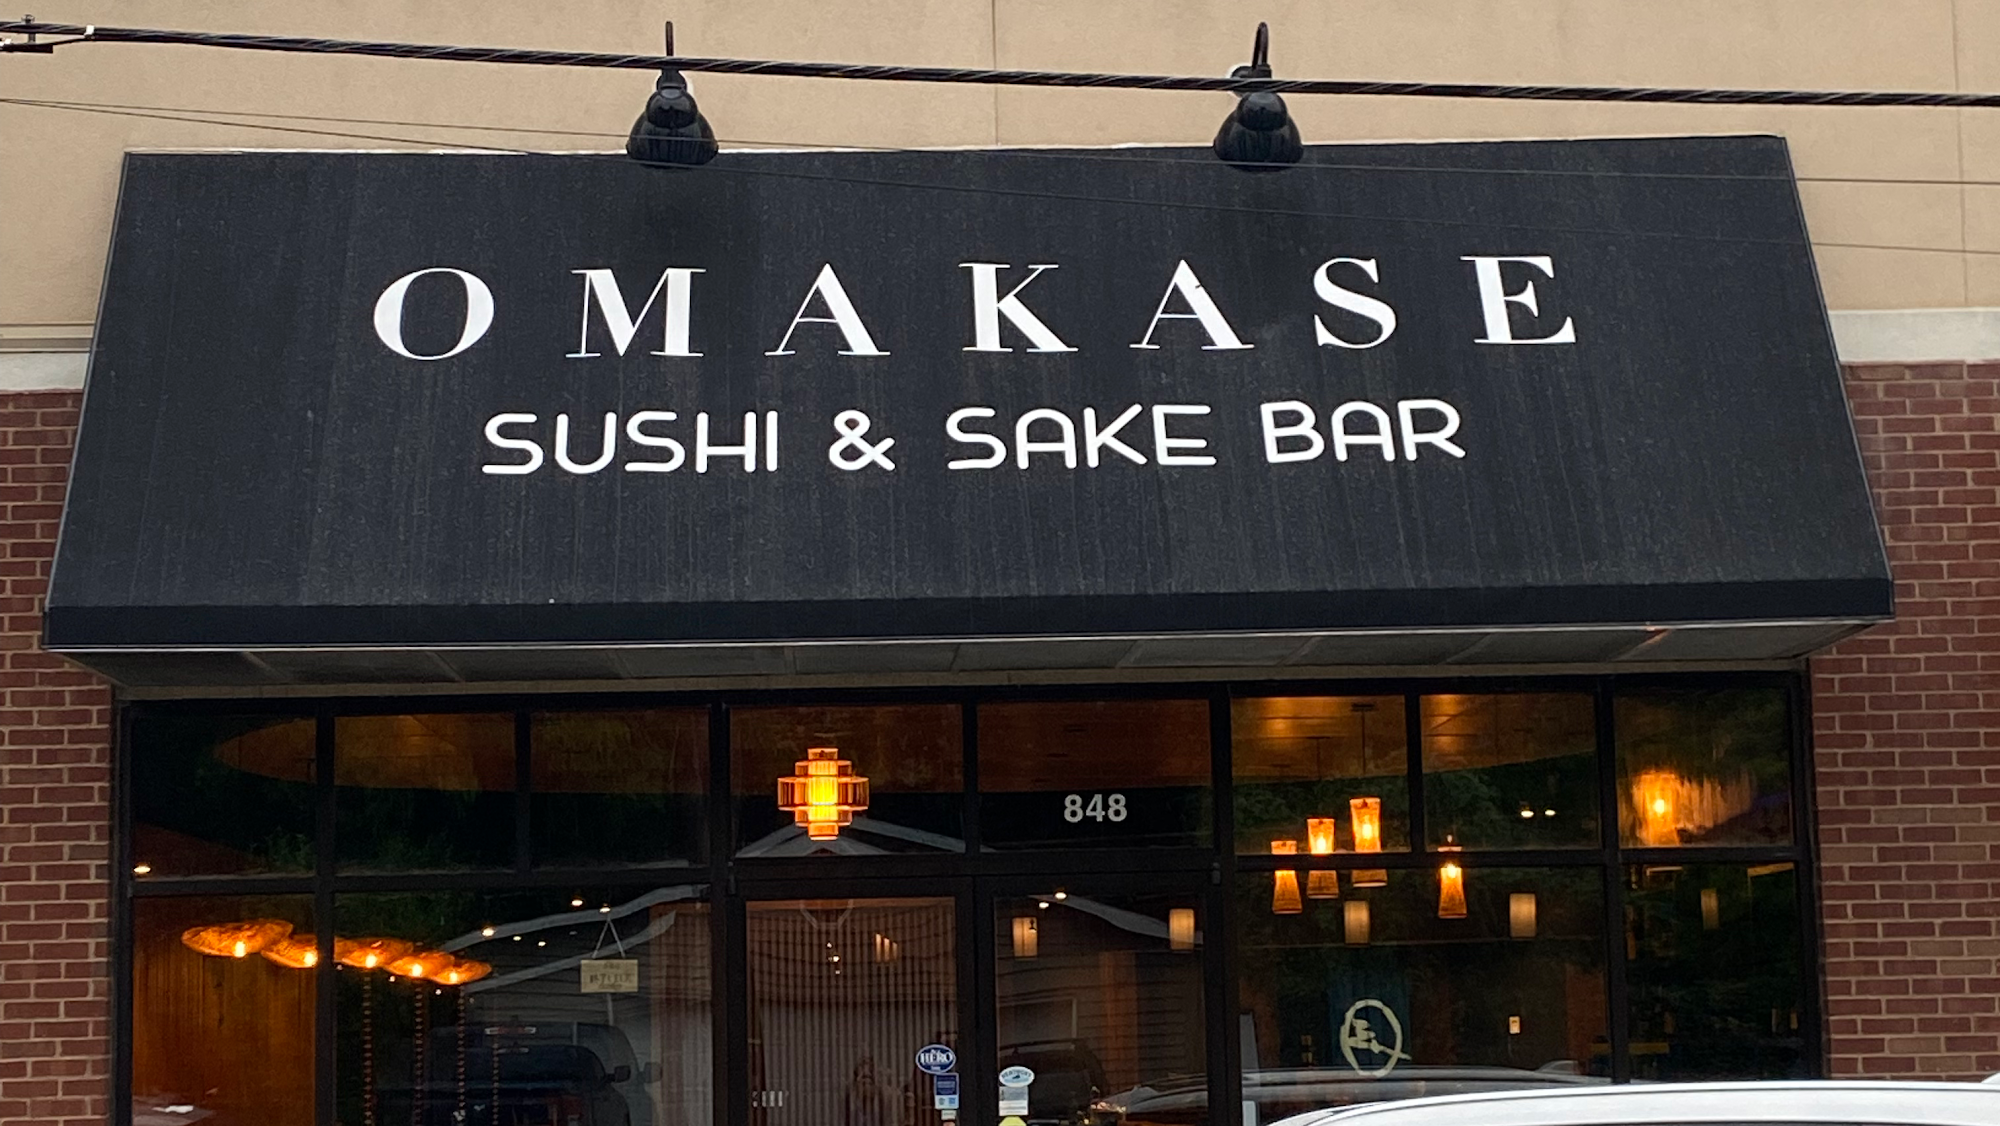 Omakase Sushi & Sake Bar at Chevy Chase